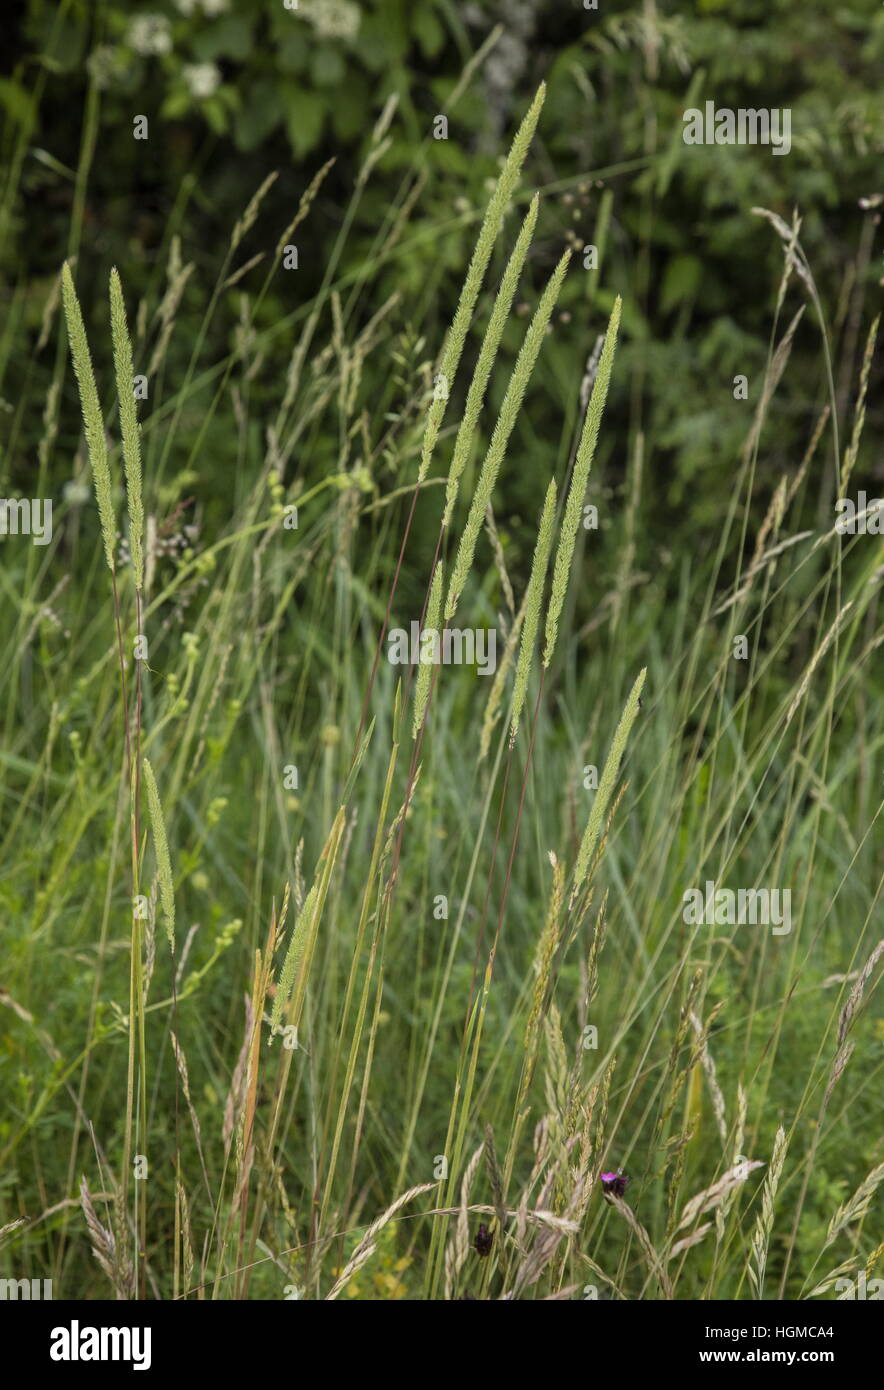 Crested hair-grass, Koeleria macrantha, in flower in dry grassland. Stock Photo